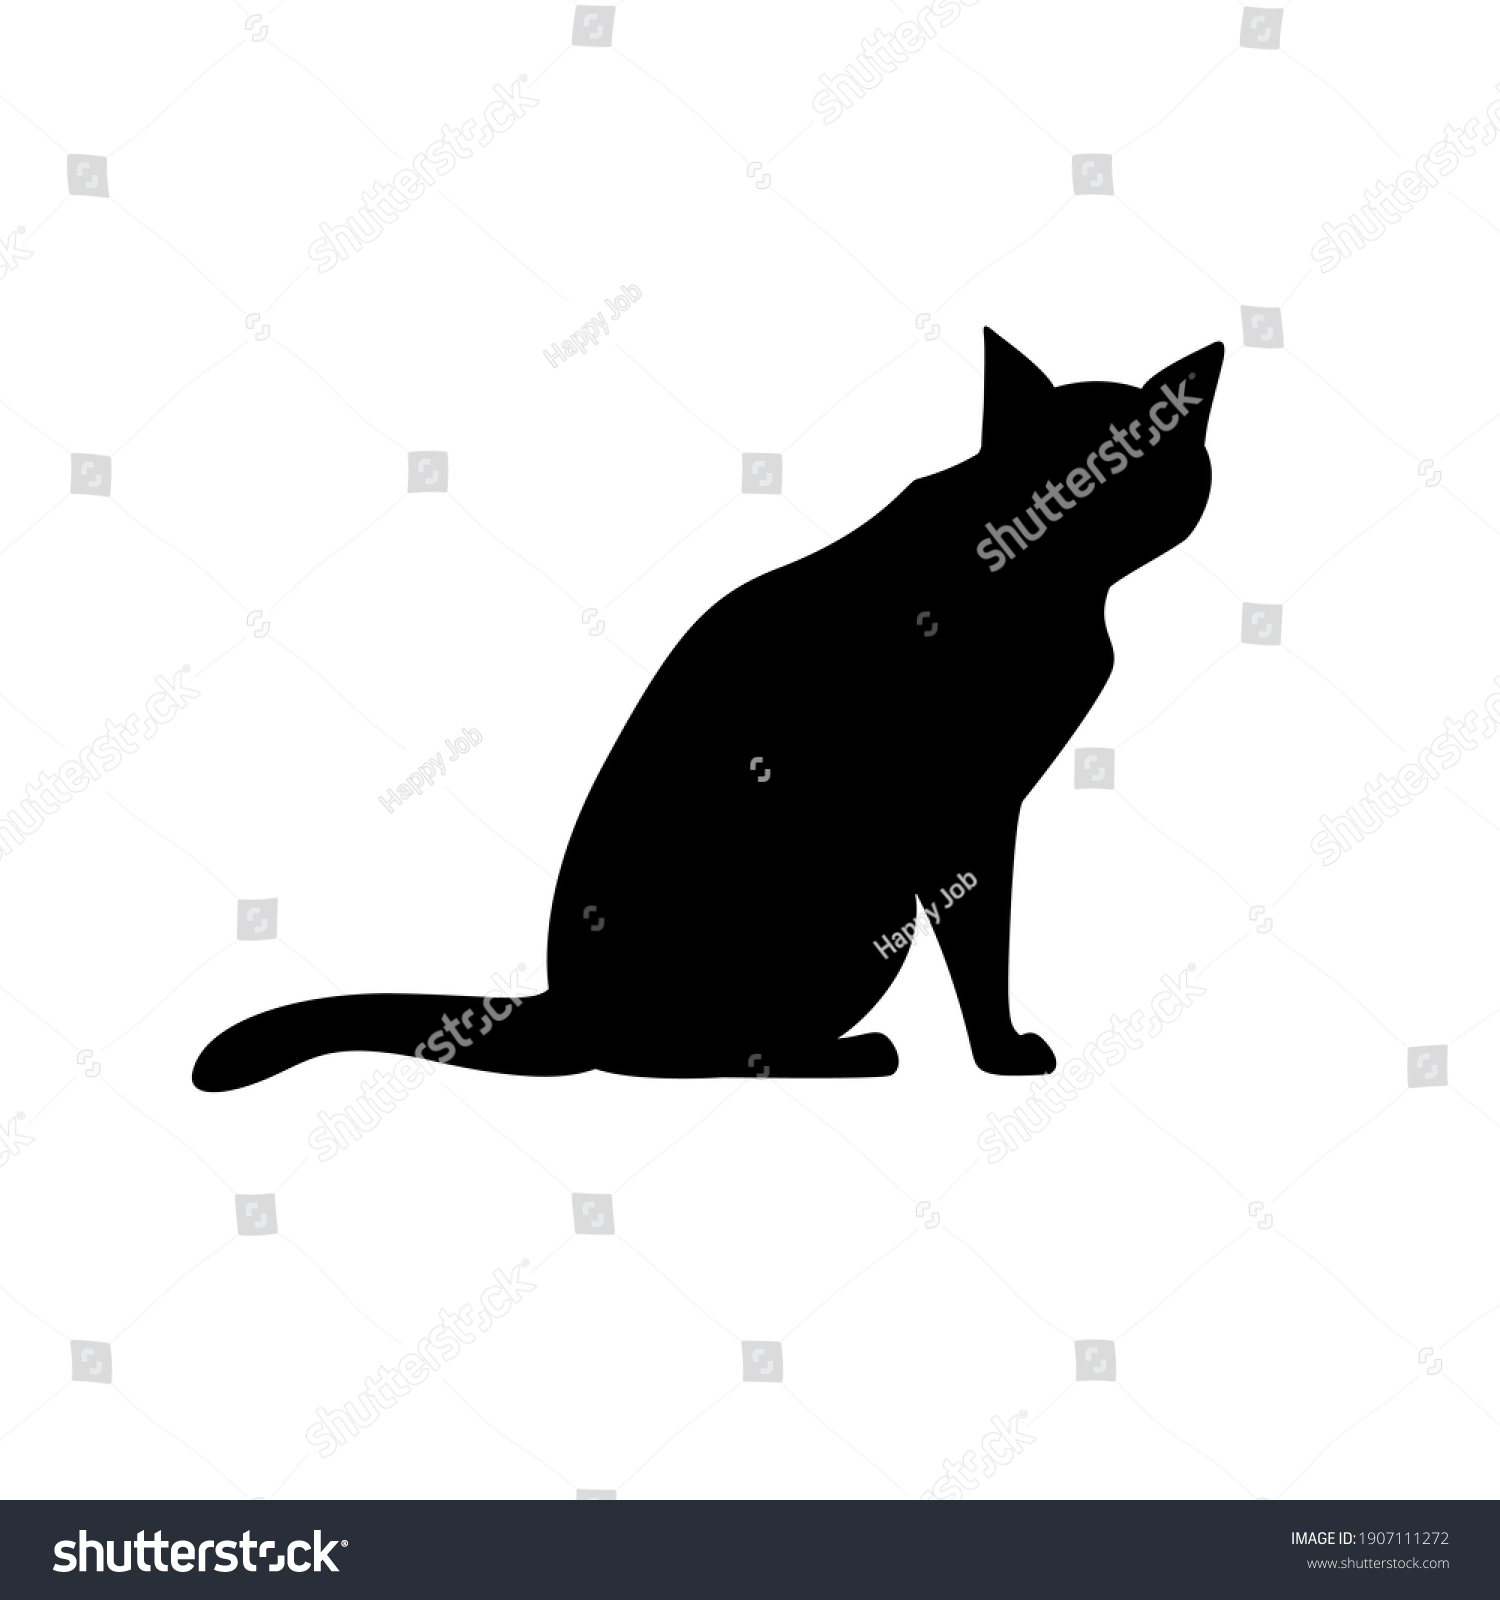 41,223 Halloween cat silhouette Images, Stock Photos & Vectors ...